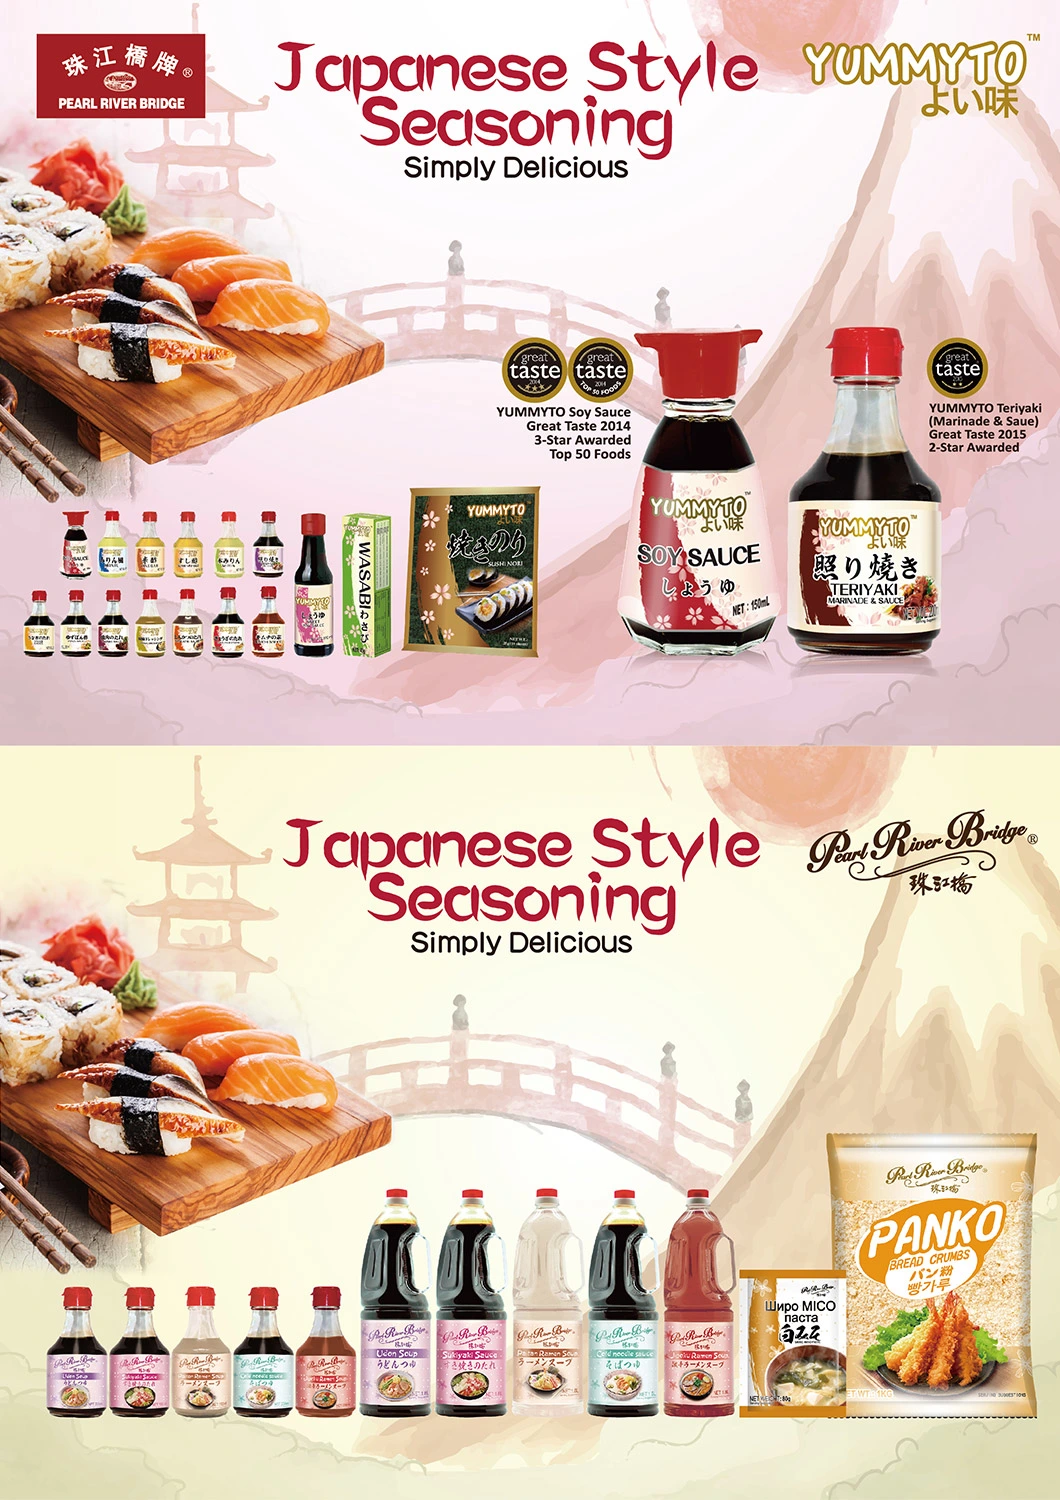 Yummyto Brand Vinegar 200ml Japanese Seasoning for Sushi